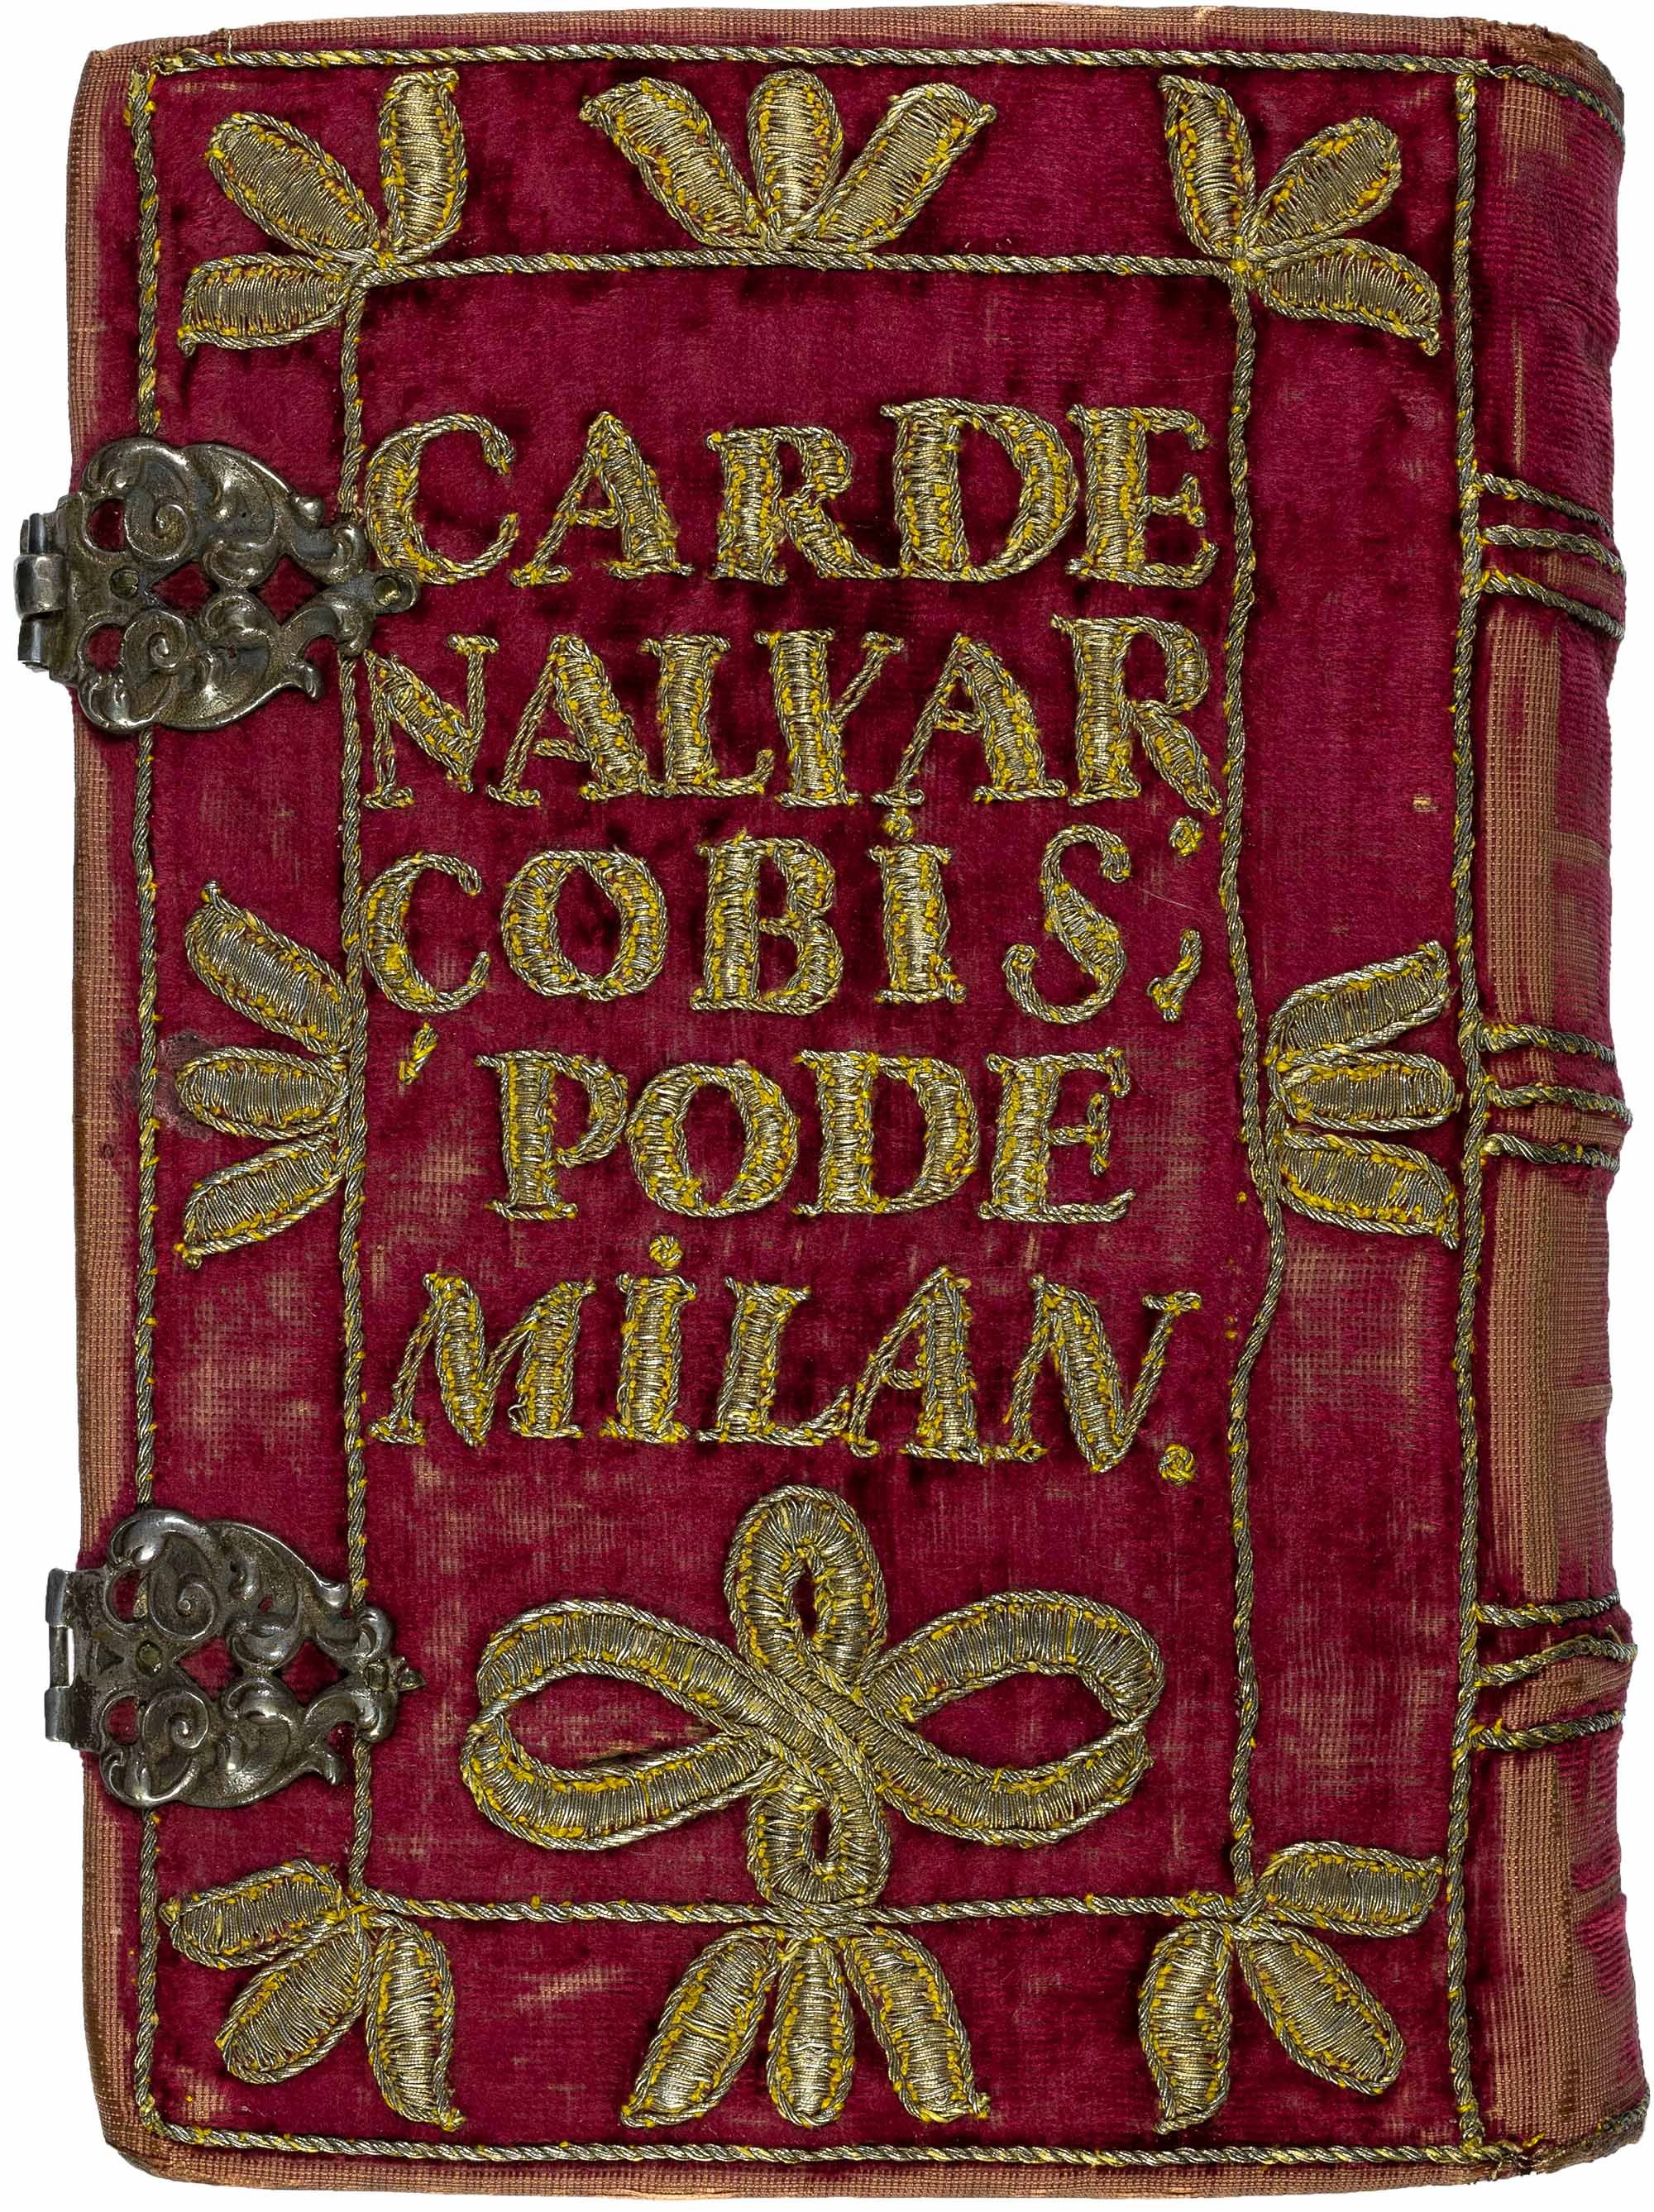 Saint-Carlo-Borromeo-reliquary-bible-plantin-1565-silk-05.jpg